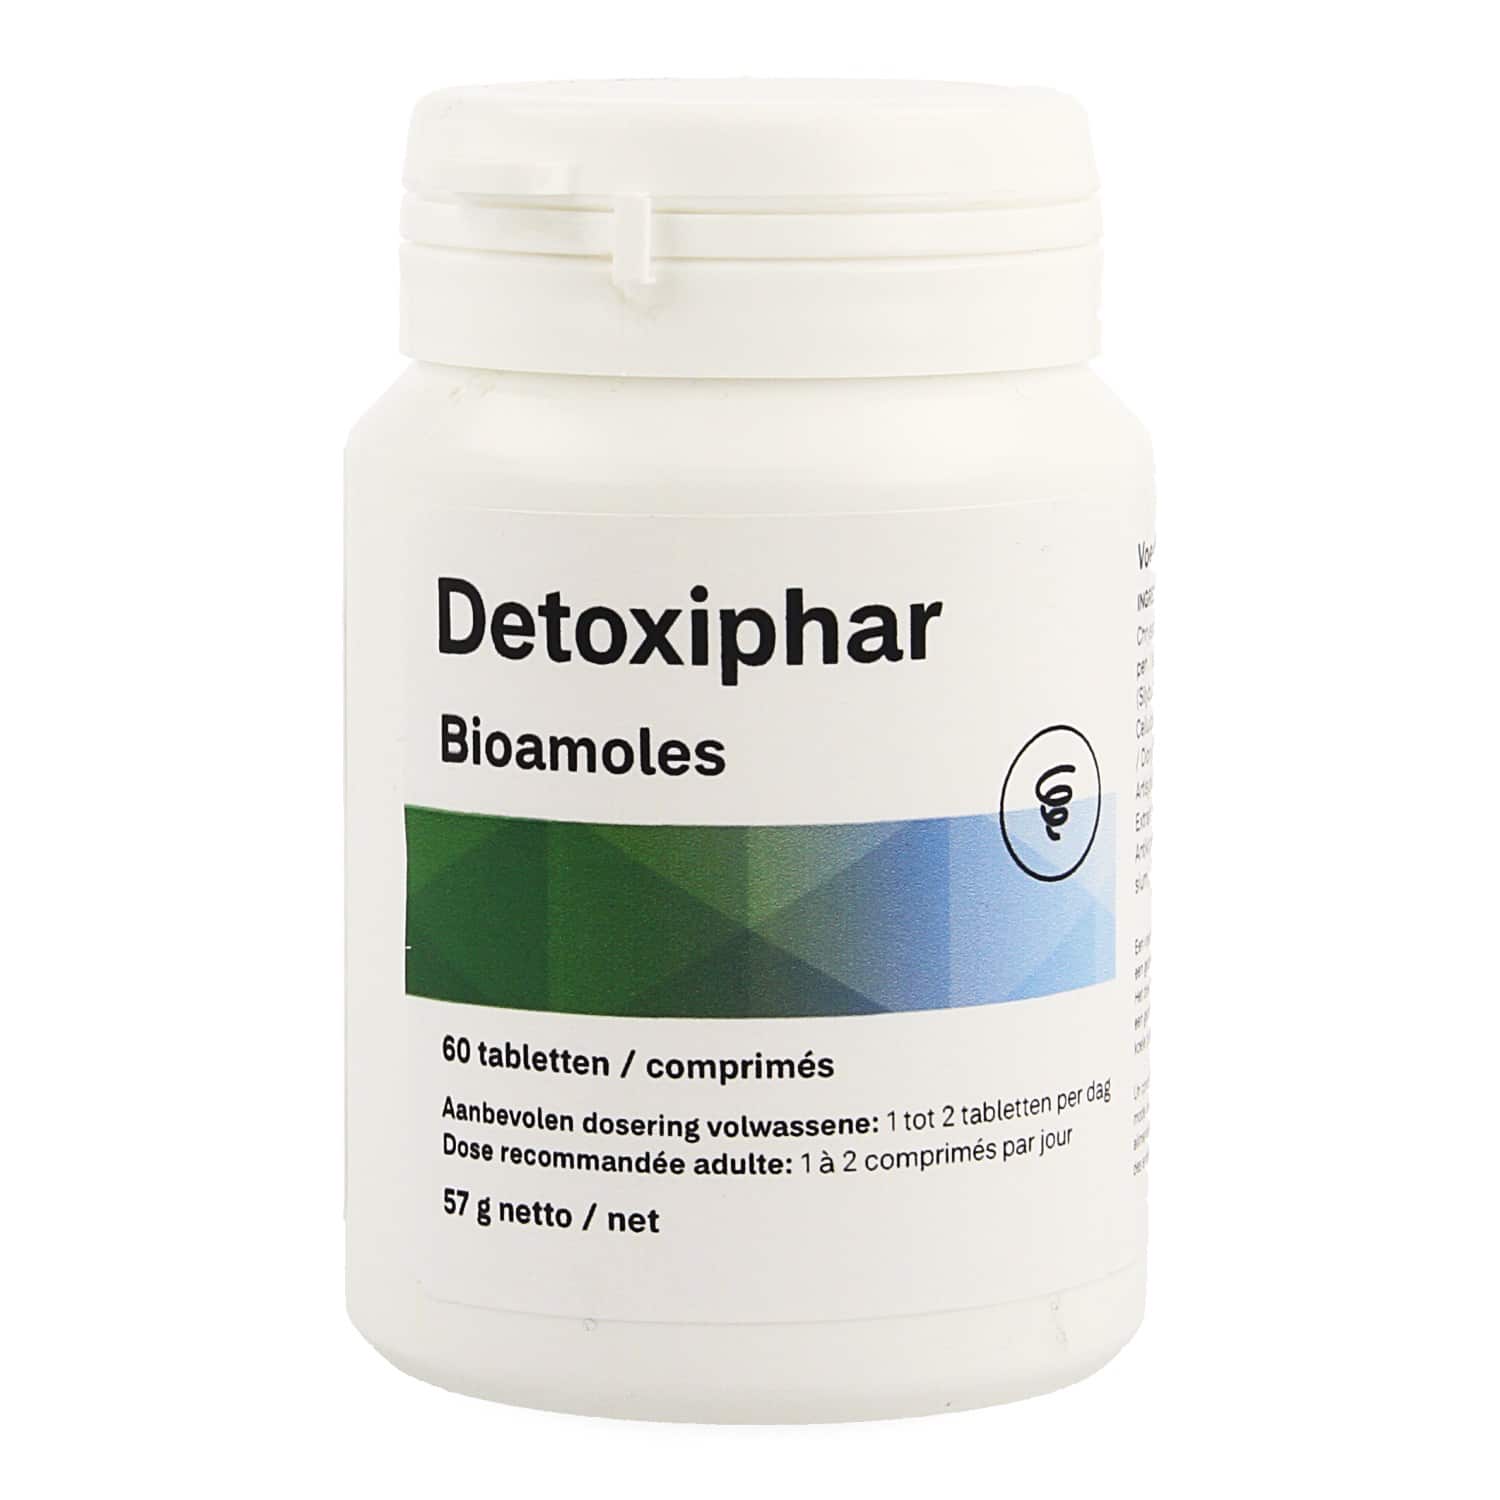 Bioamoles Detoxiphar